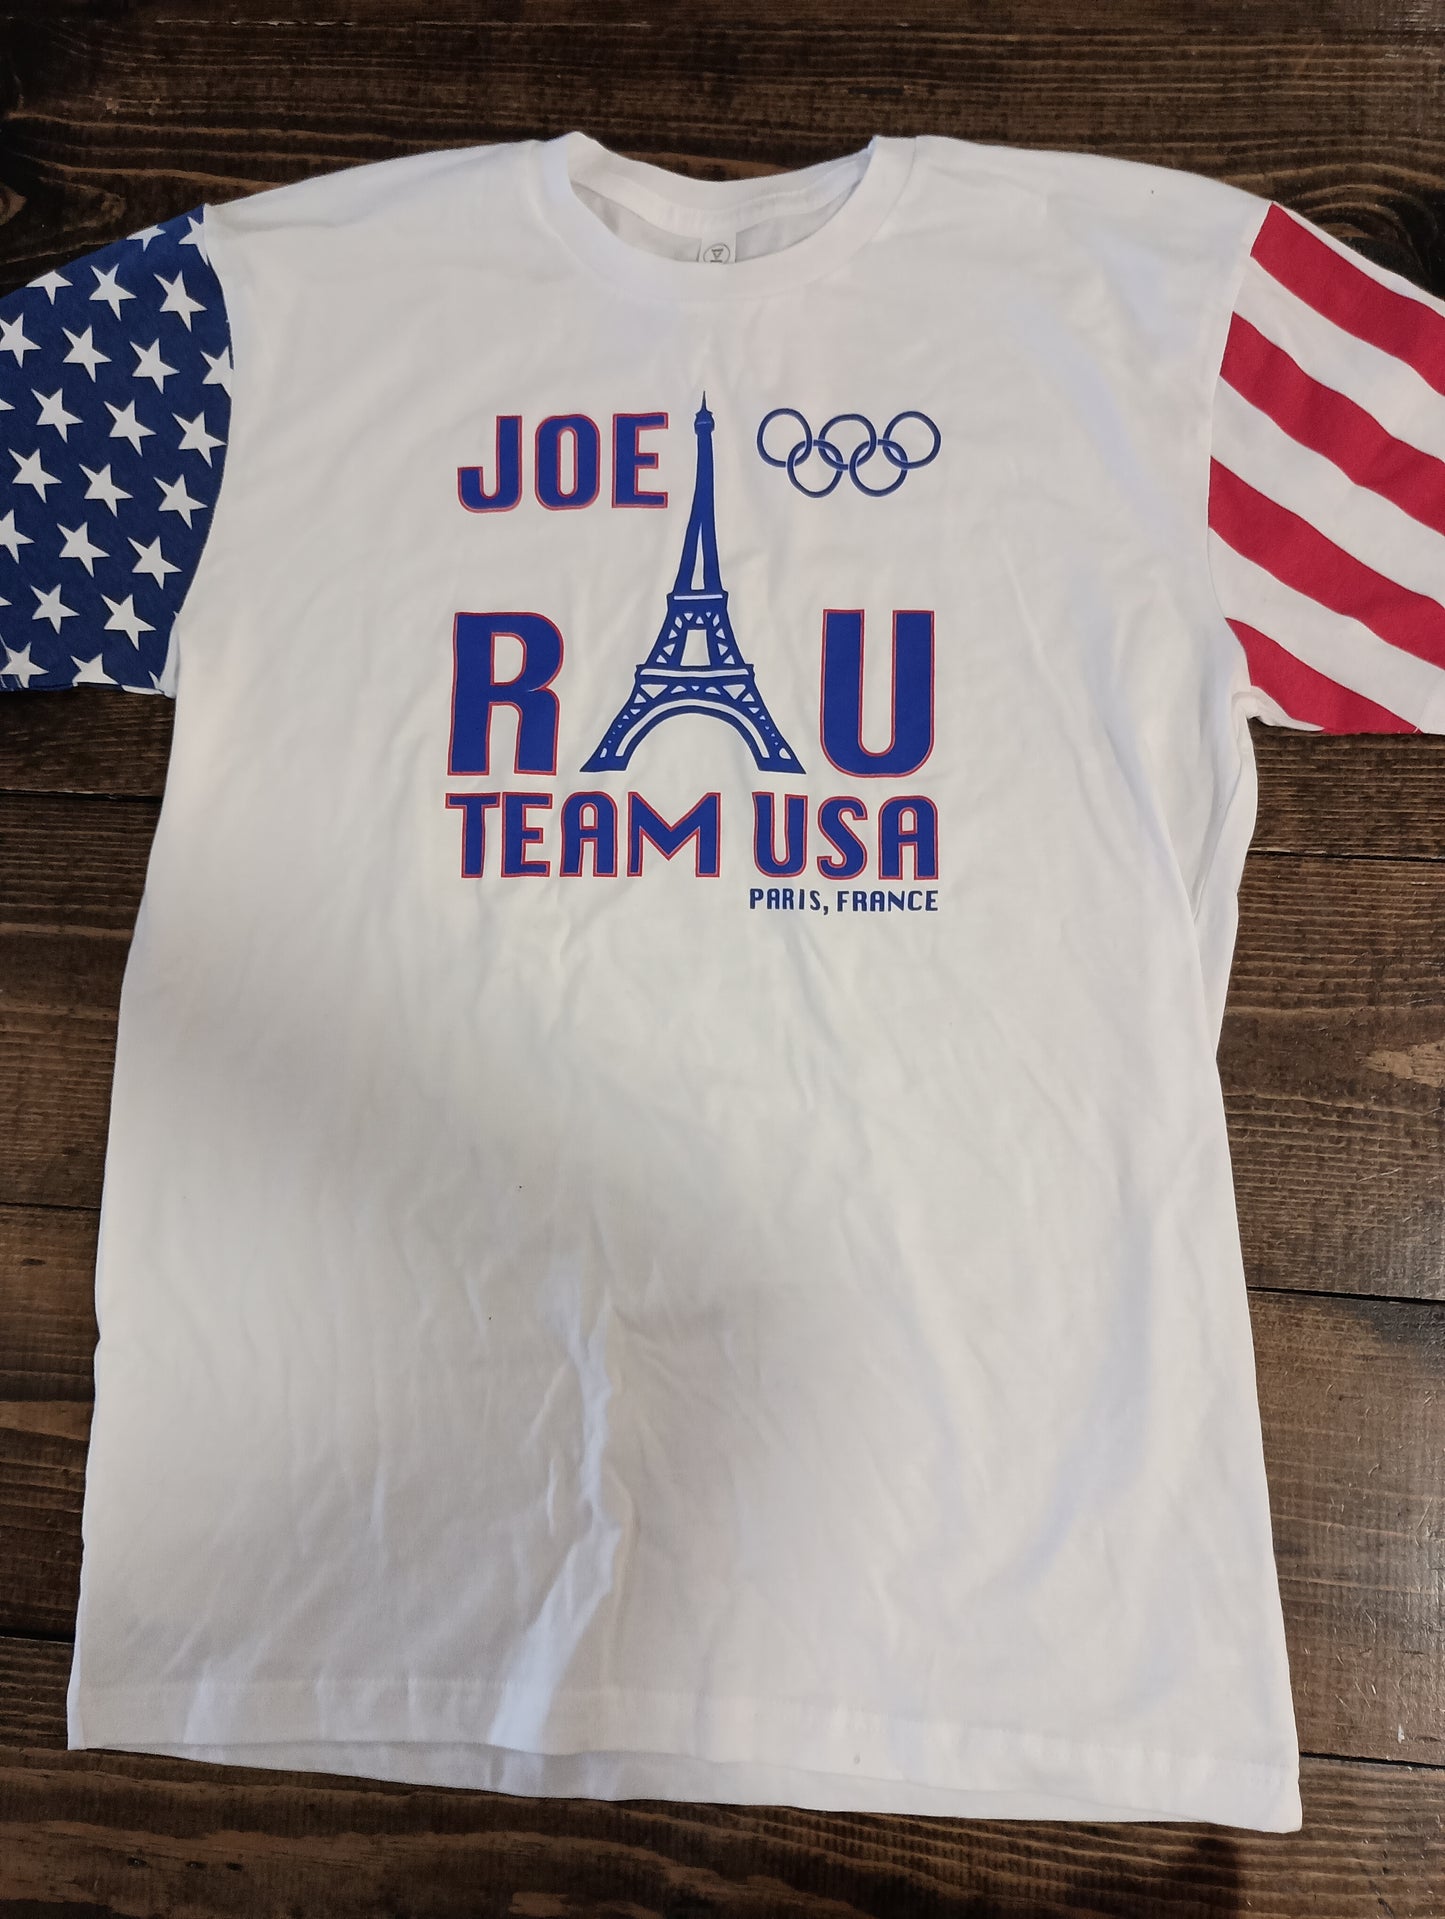 Joe Rau in Paris Sponsorship opportunities Available!